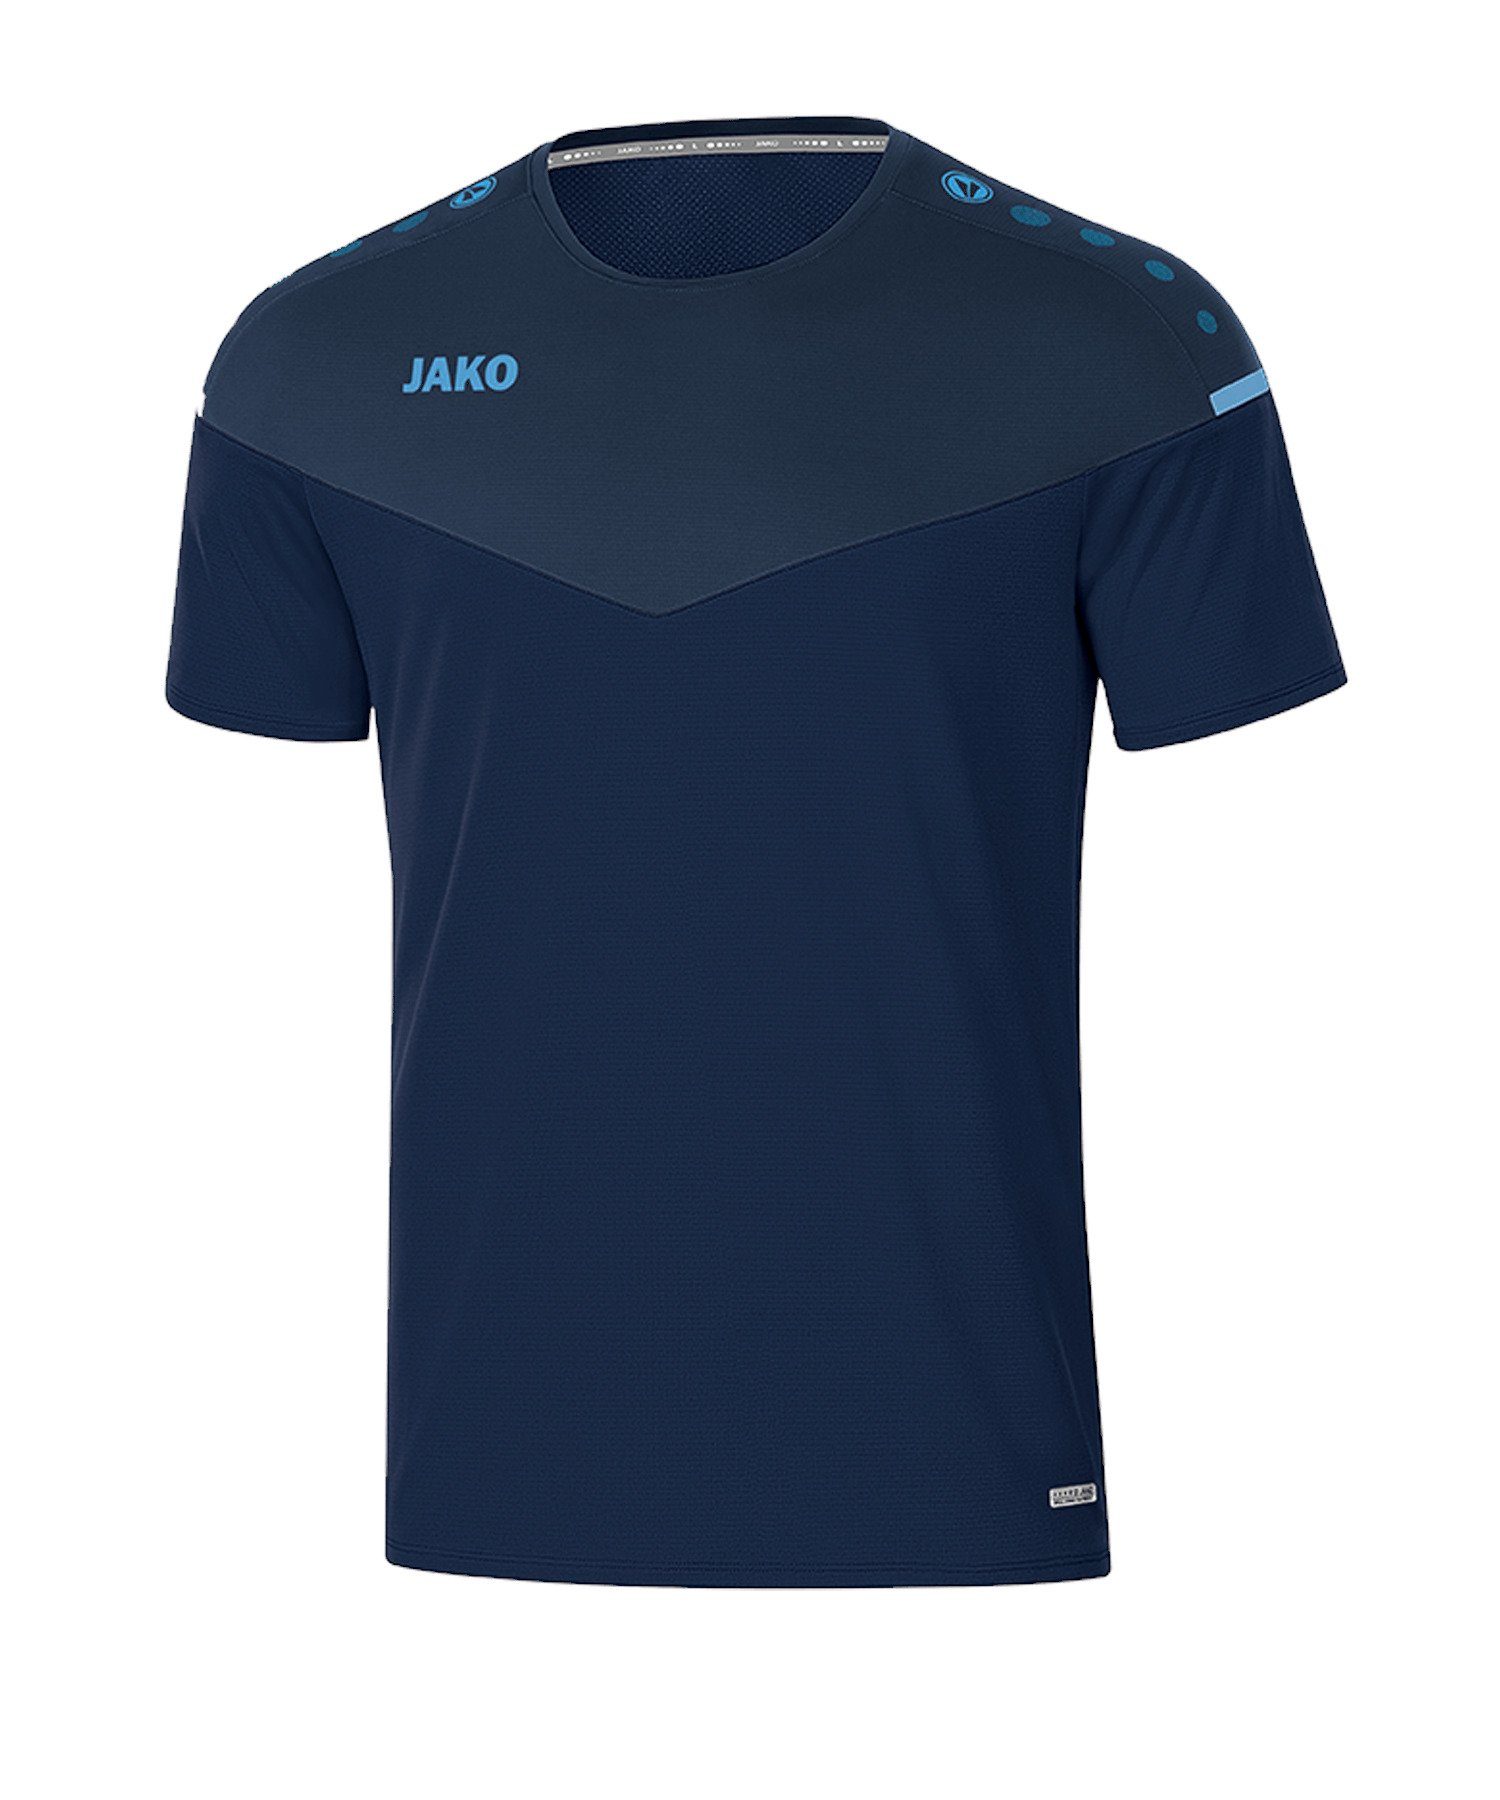 Jako blau T-Shirt Champ default T-Shirt 2.0